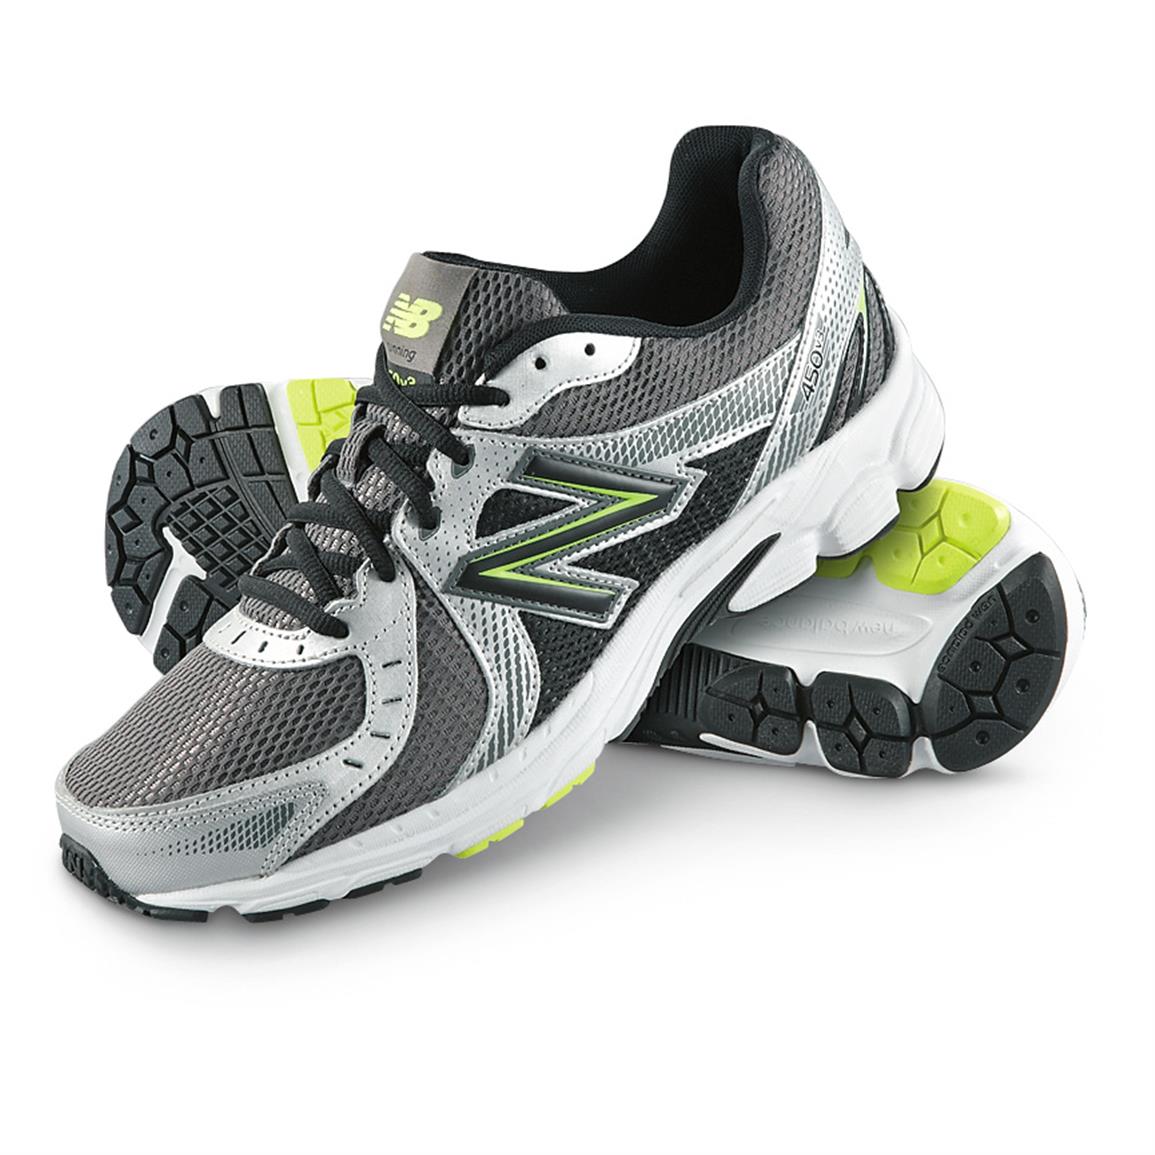 New Balance 450v3 Running Shoes, Silver 